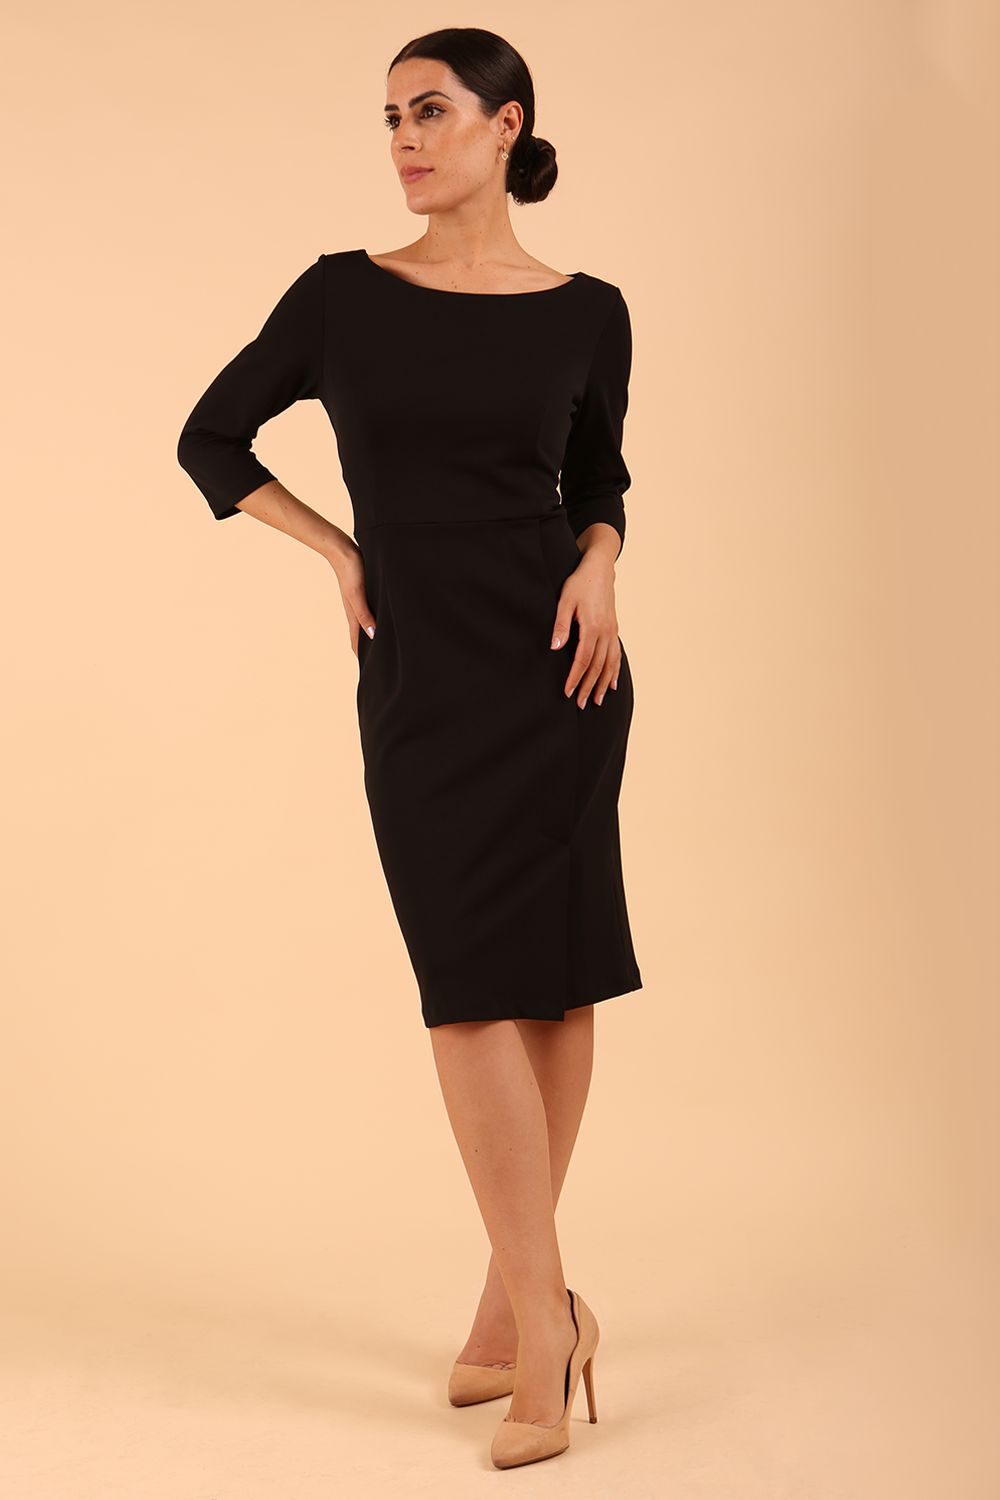 Model wearing diva catwalk Kinga 3/4 Sleeve pencil skirt dress in Black colour